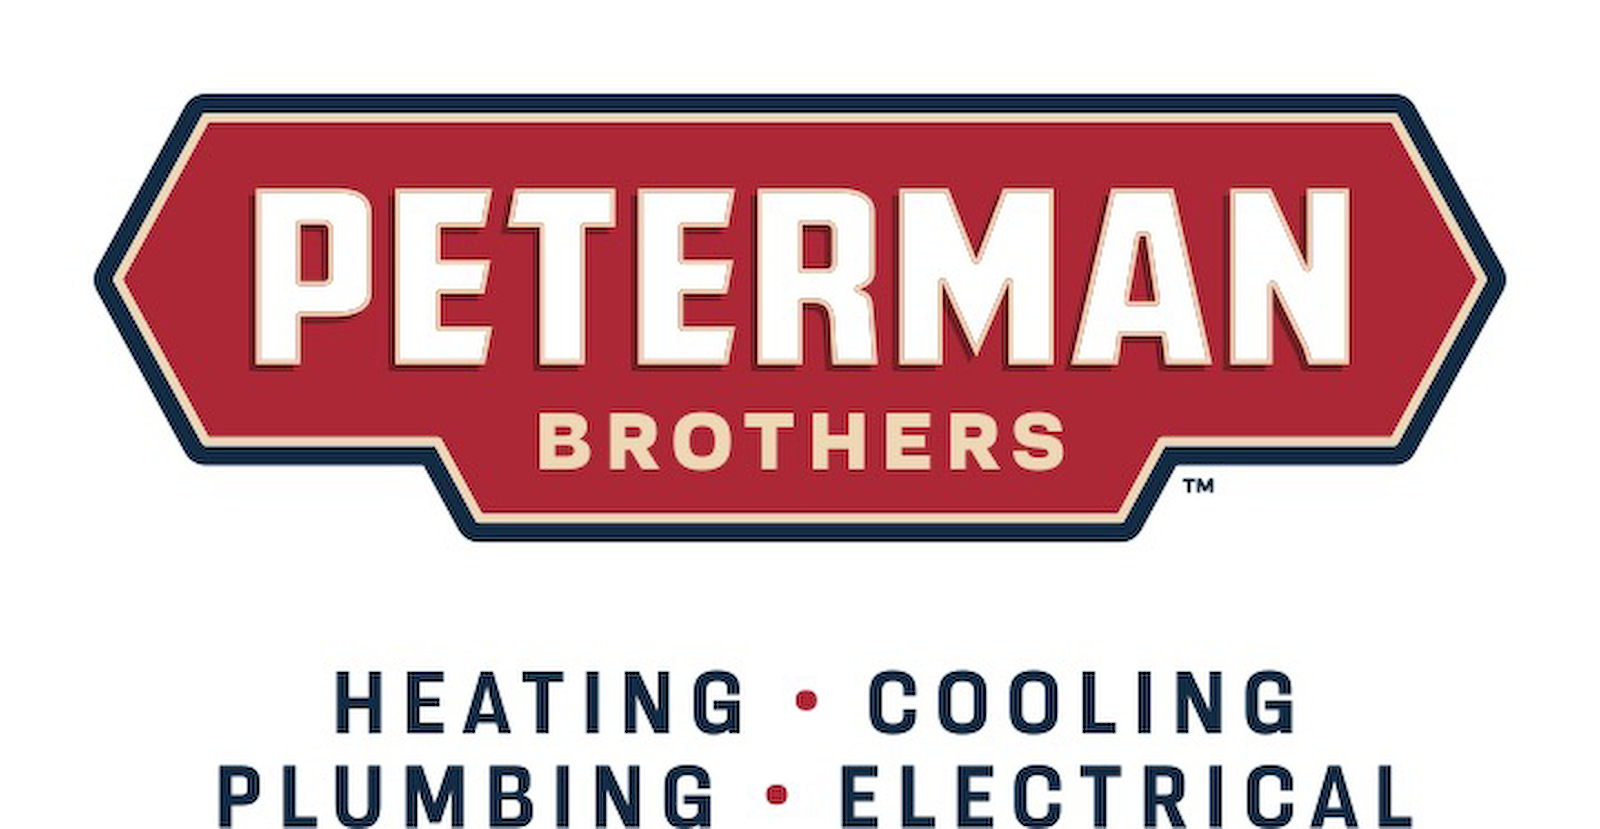 Peterman Brothers